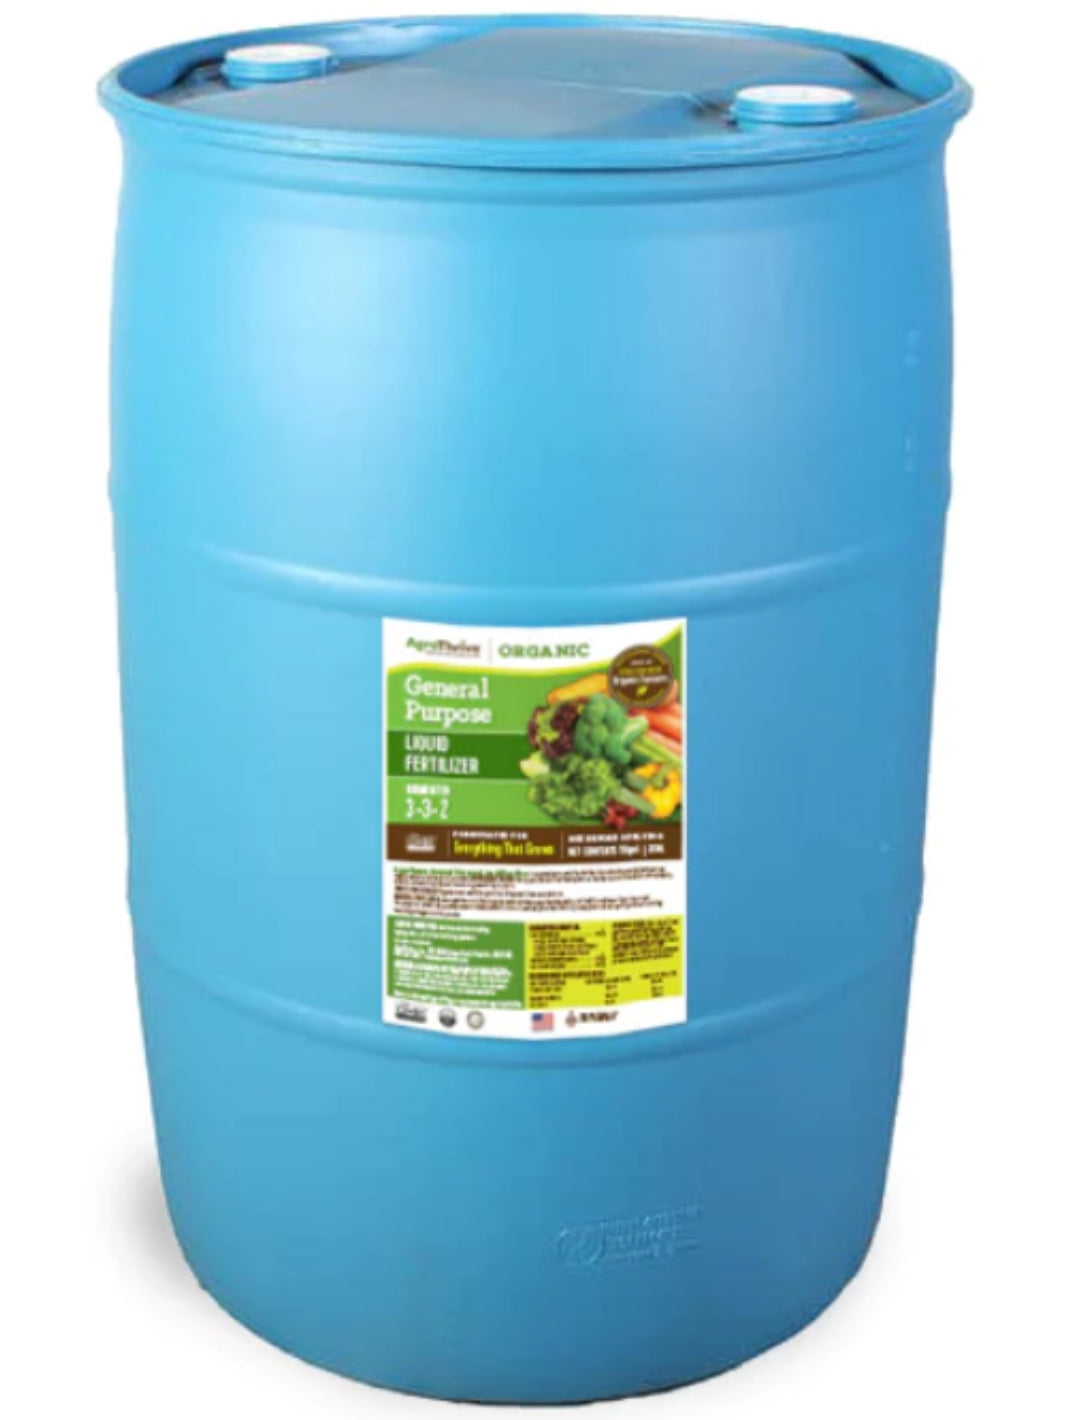 AgroThrive Organic 3-3-2 General Purpose Liquid Fertilizer 55 Gallon